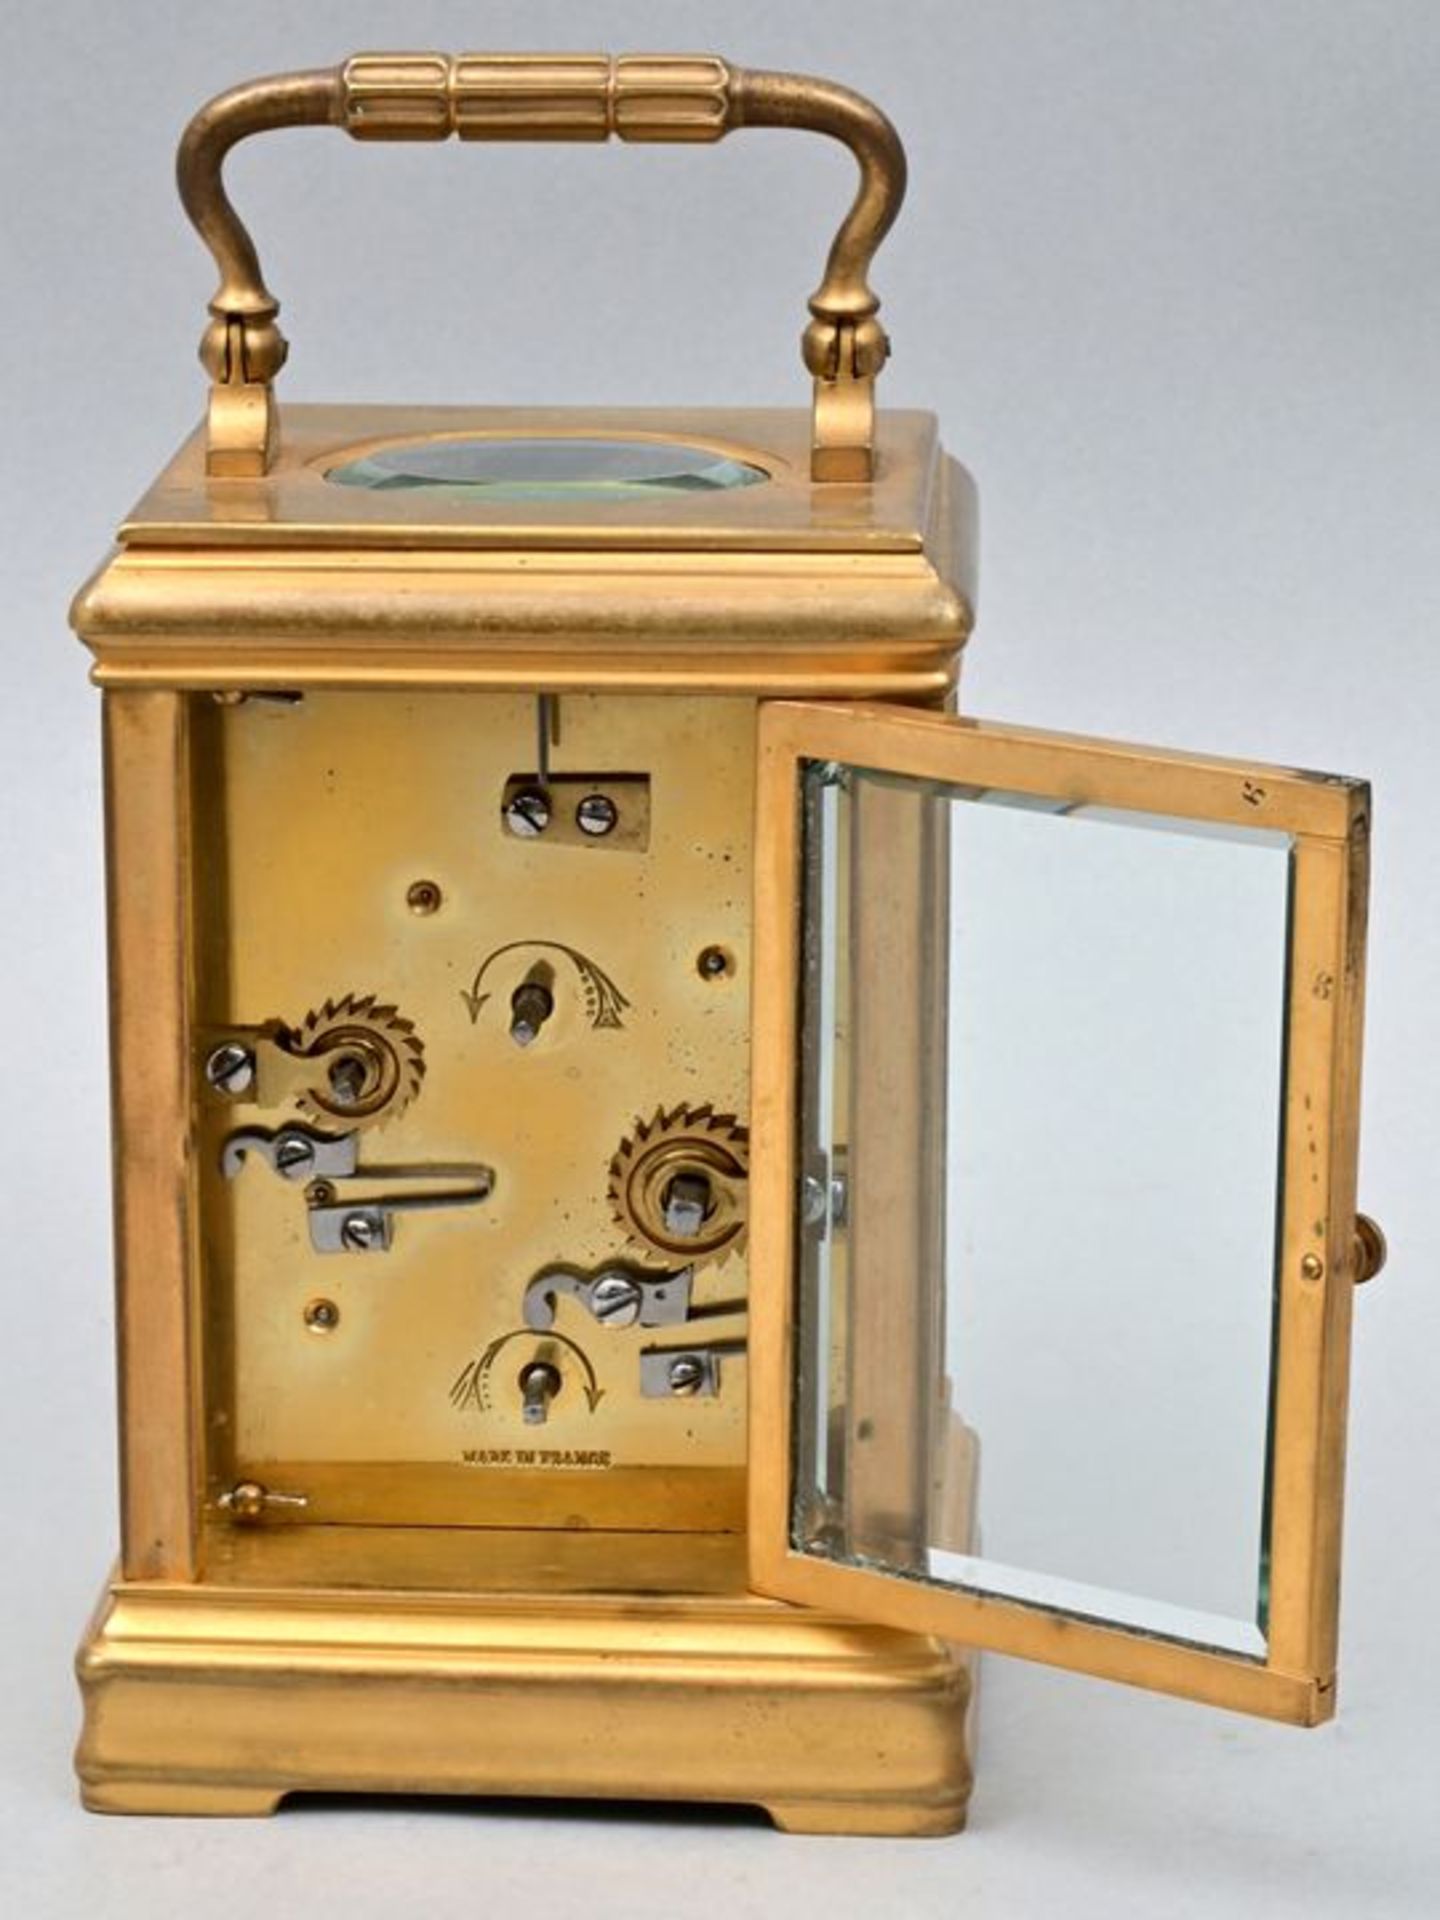 Reiseuhr Anton Hawelk, Wien / Travel clock - Image 3 of 8